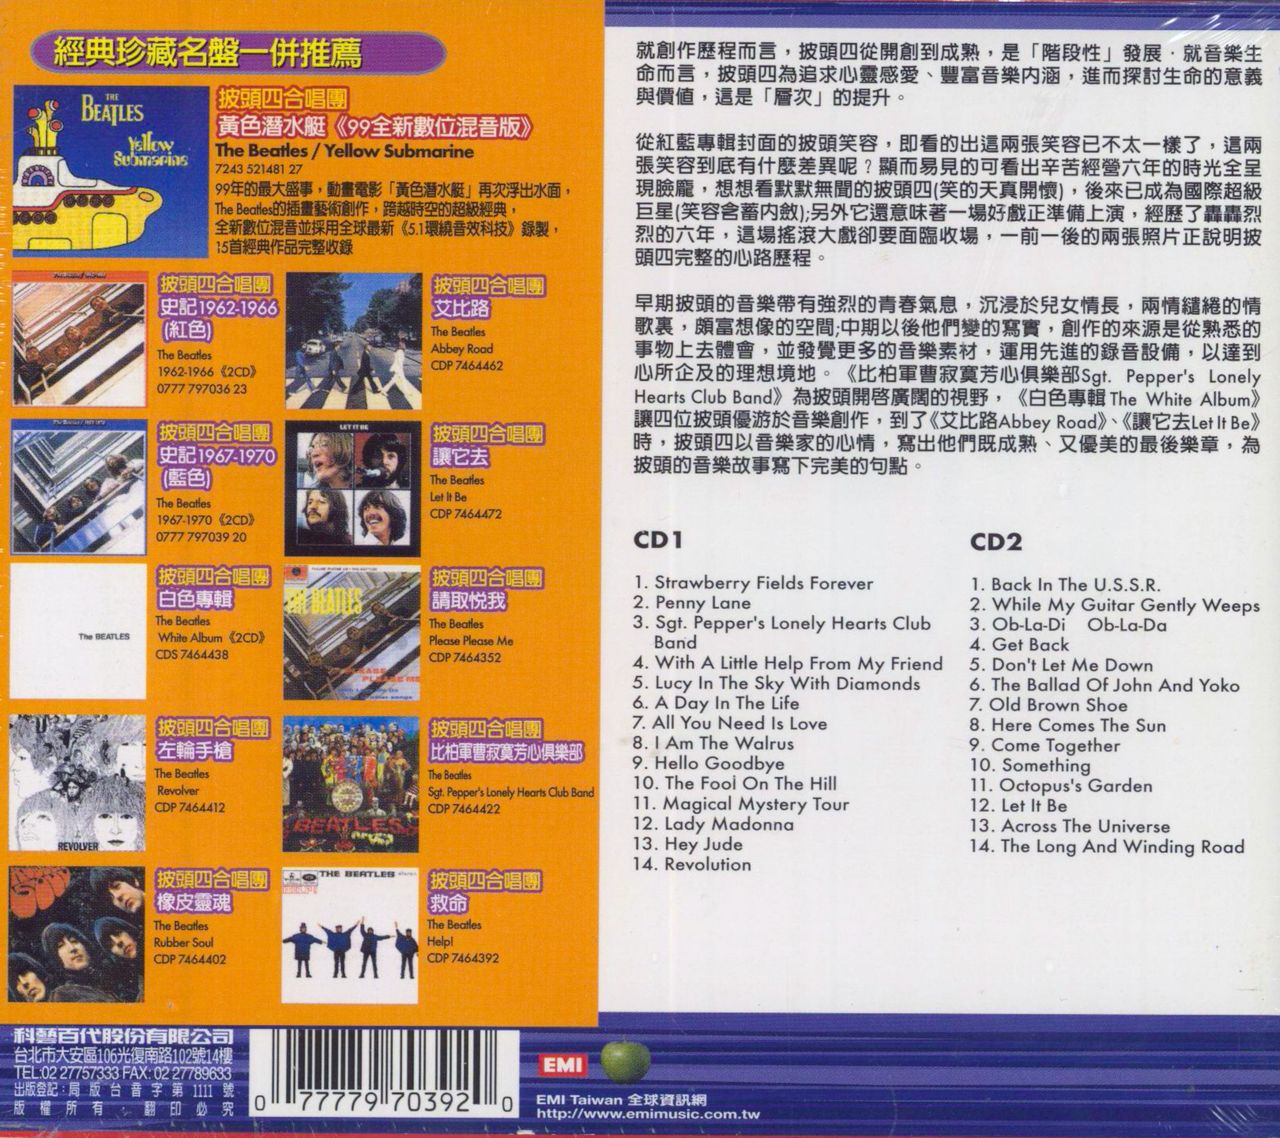 The Beatles 1967-1970 [The Blue Album] Taiwanese 2-CD album set